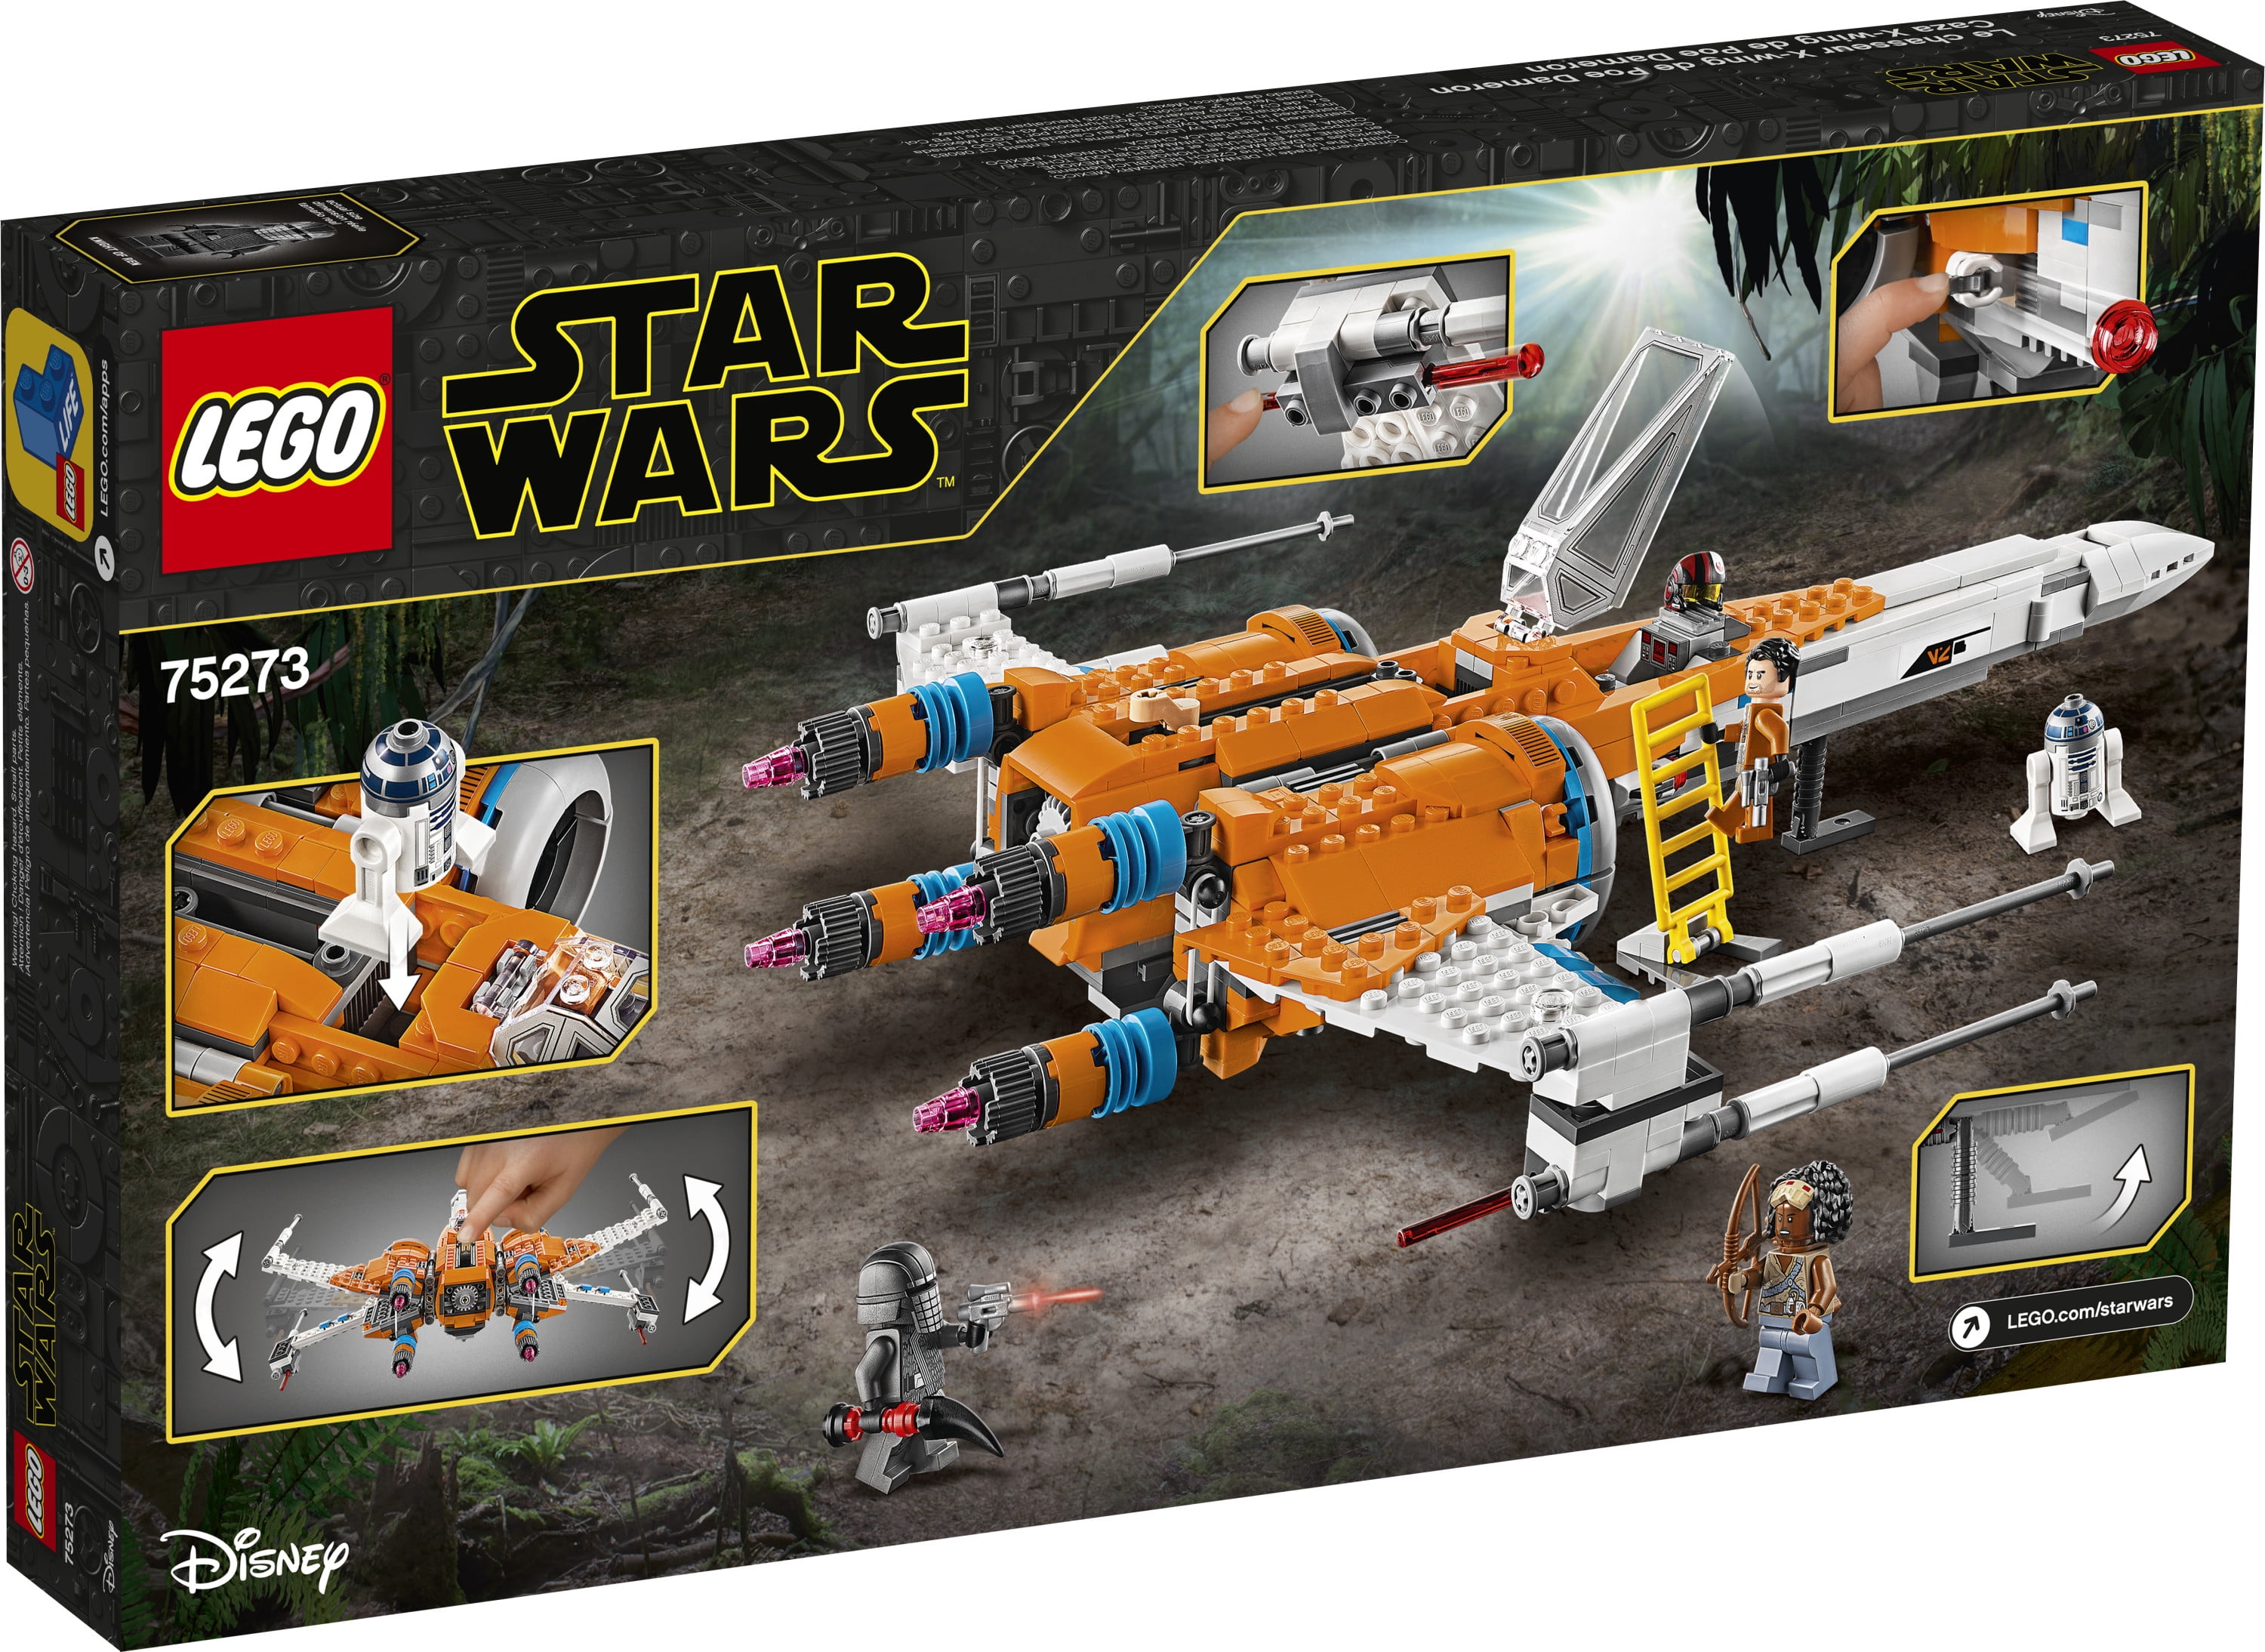 LEGO 75273 Star Wars Poe Dameron's X-wing Fighter Building 761 Pieces - Walmart.com